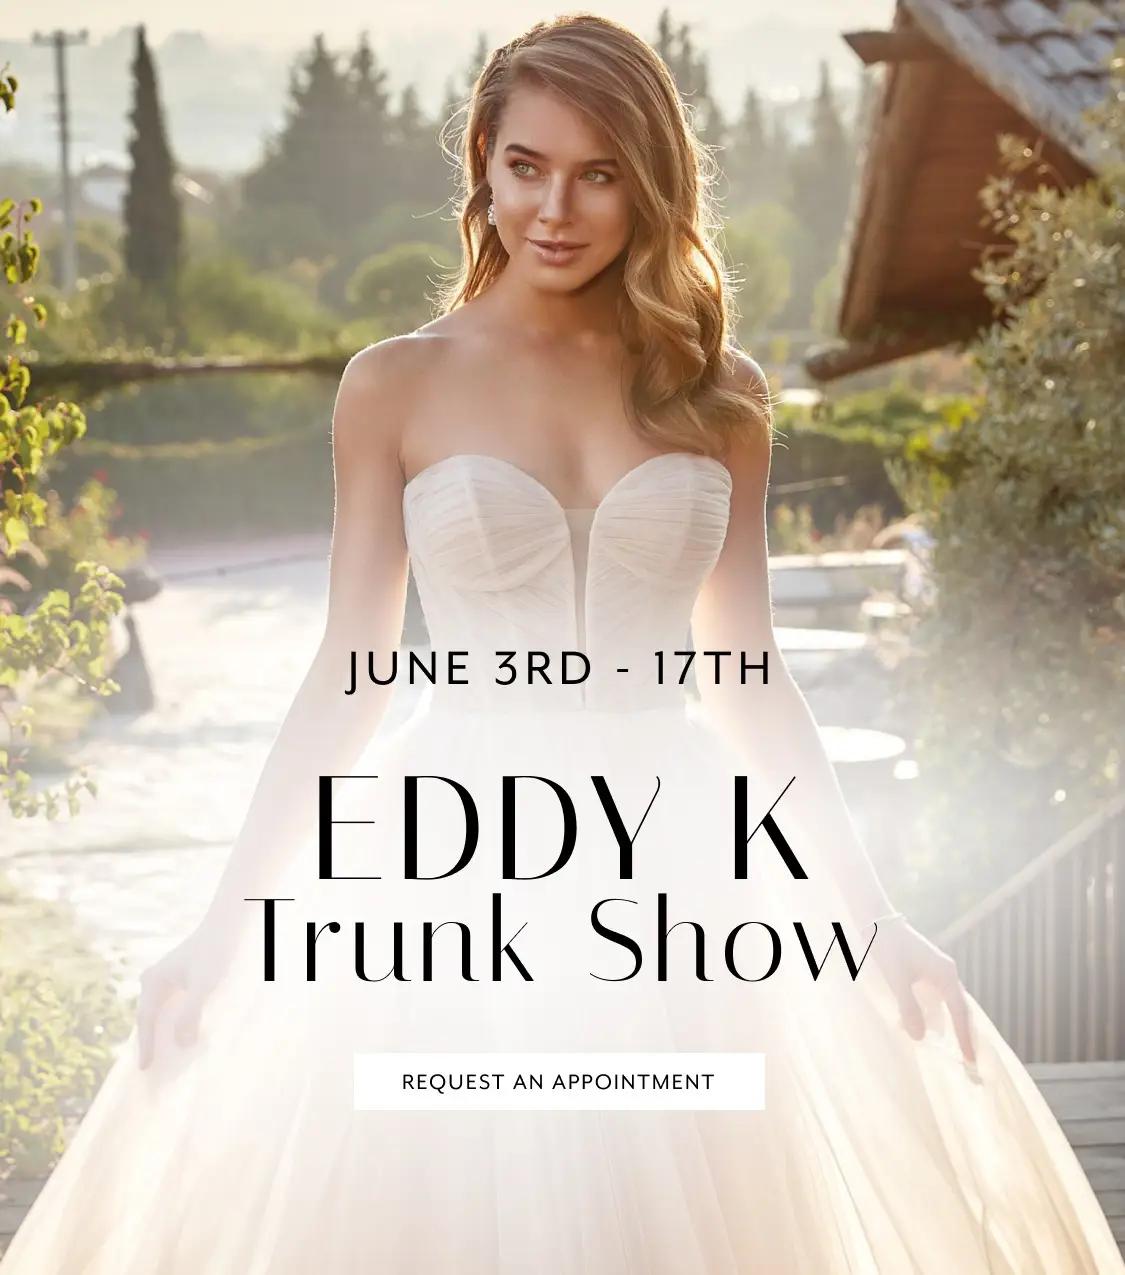 Eddy K trunk show